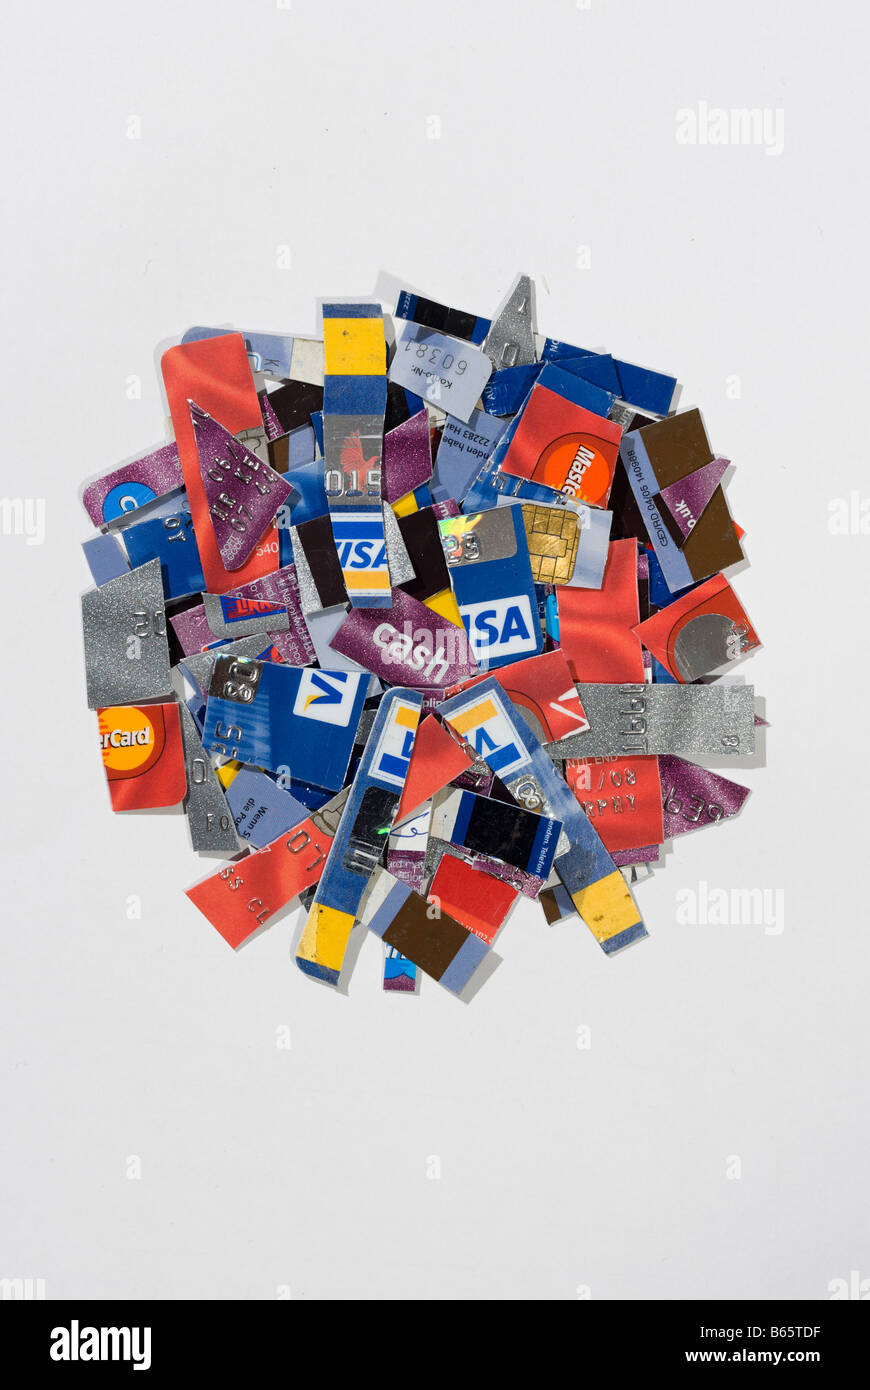 Circular pile of cut up assorted bank credit cards Stock Photo